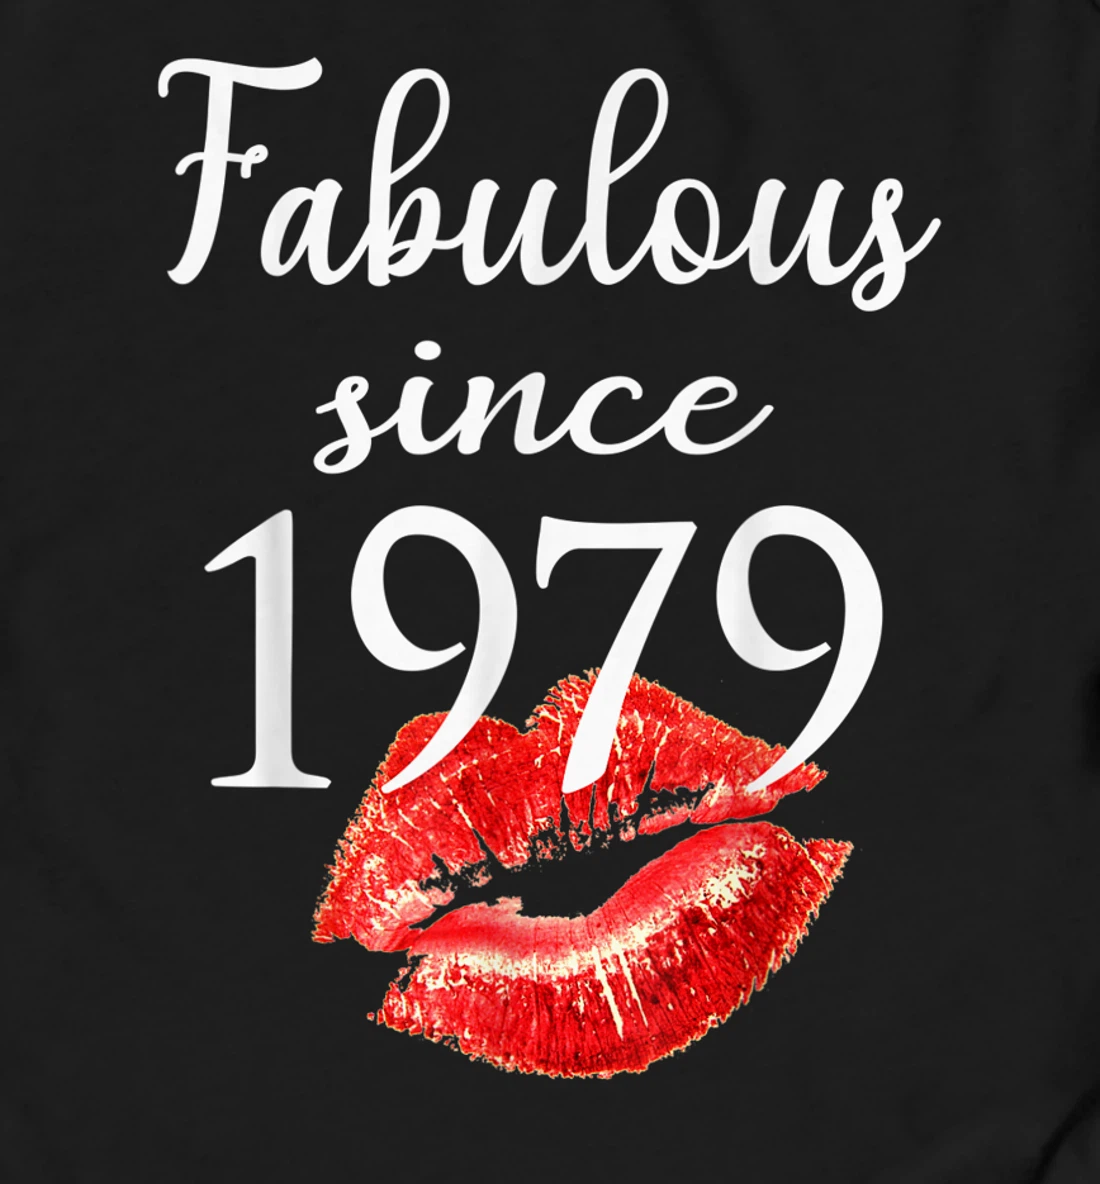 Fabulous Since 1979 Chapter 42 Birthday Gifts Tees Long Sleeve T Shirt All Print Az